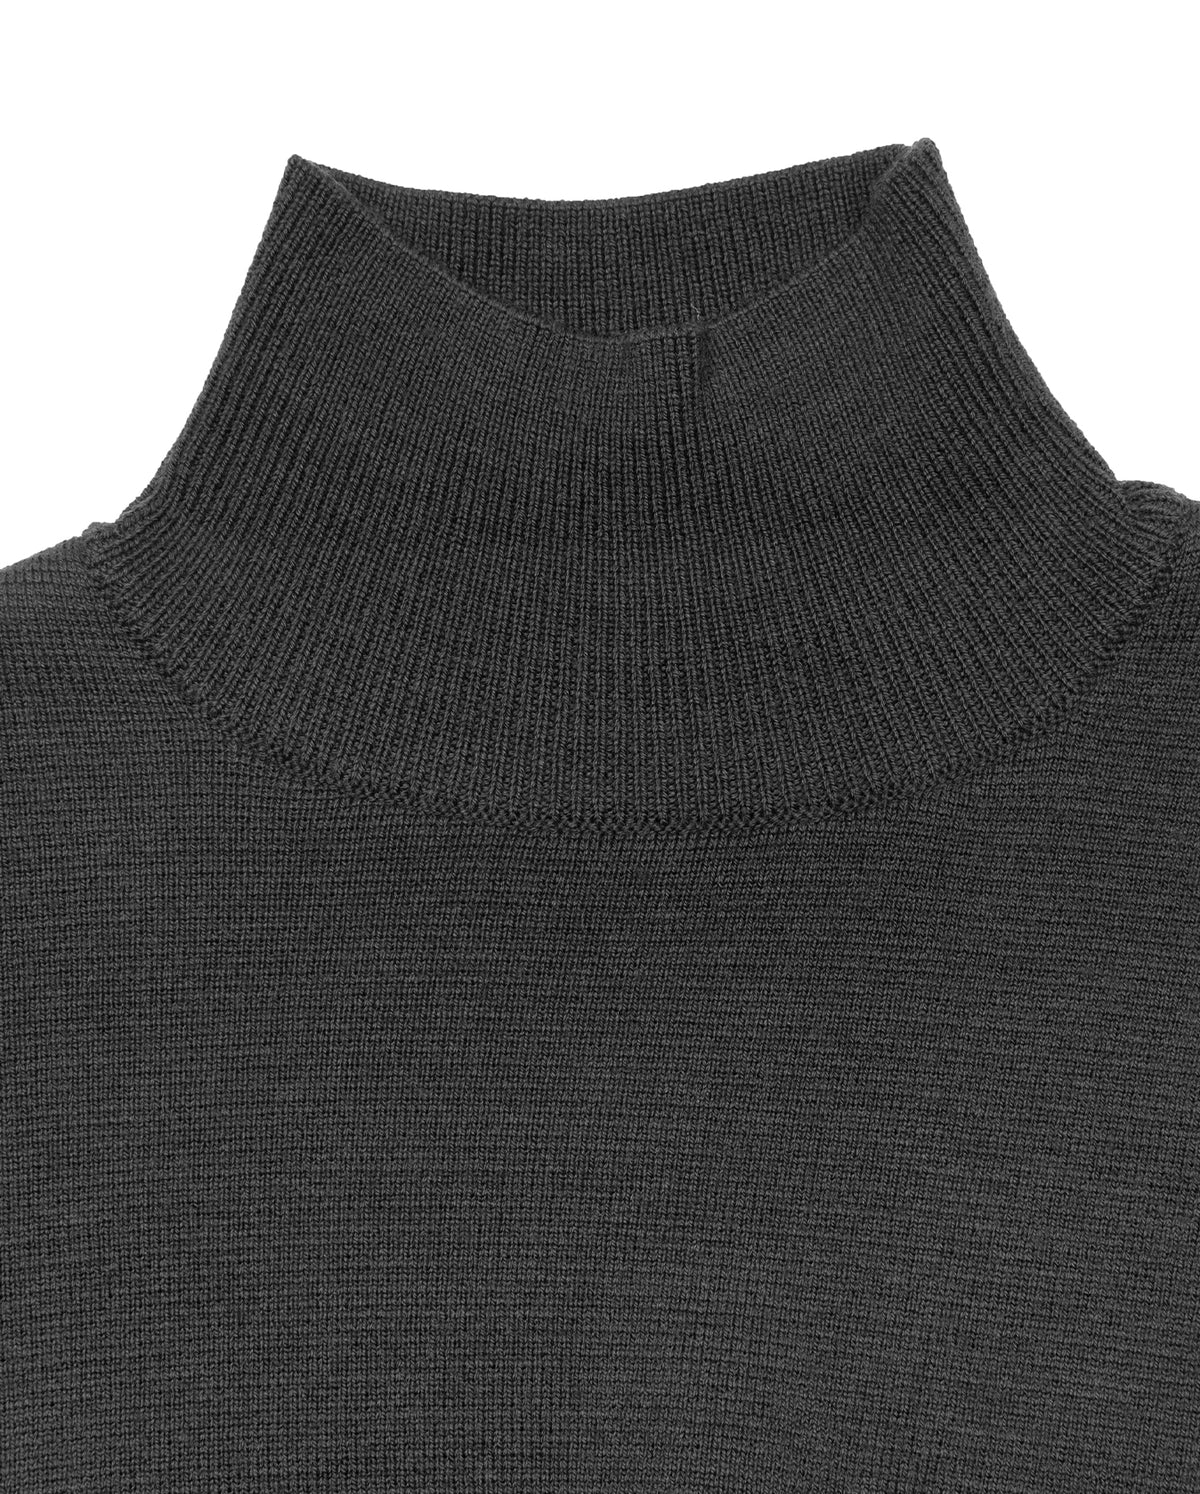 Asymmetrical Turtleneck Sweater